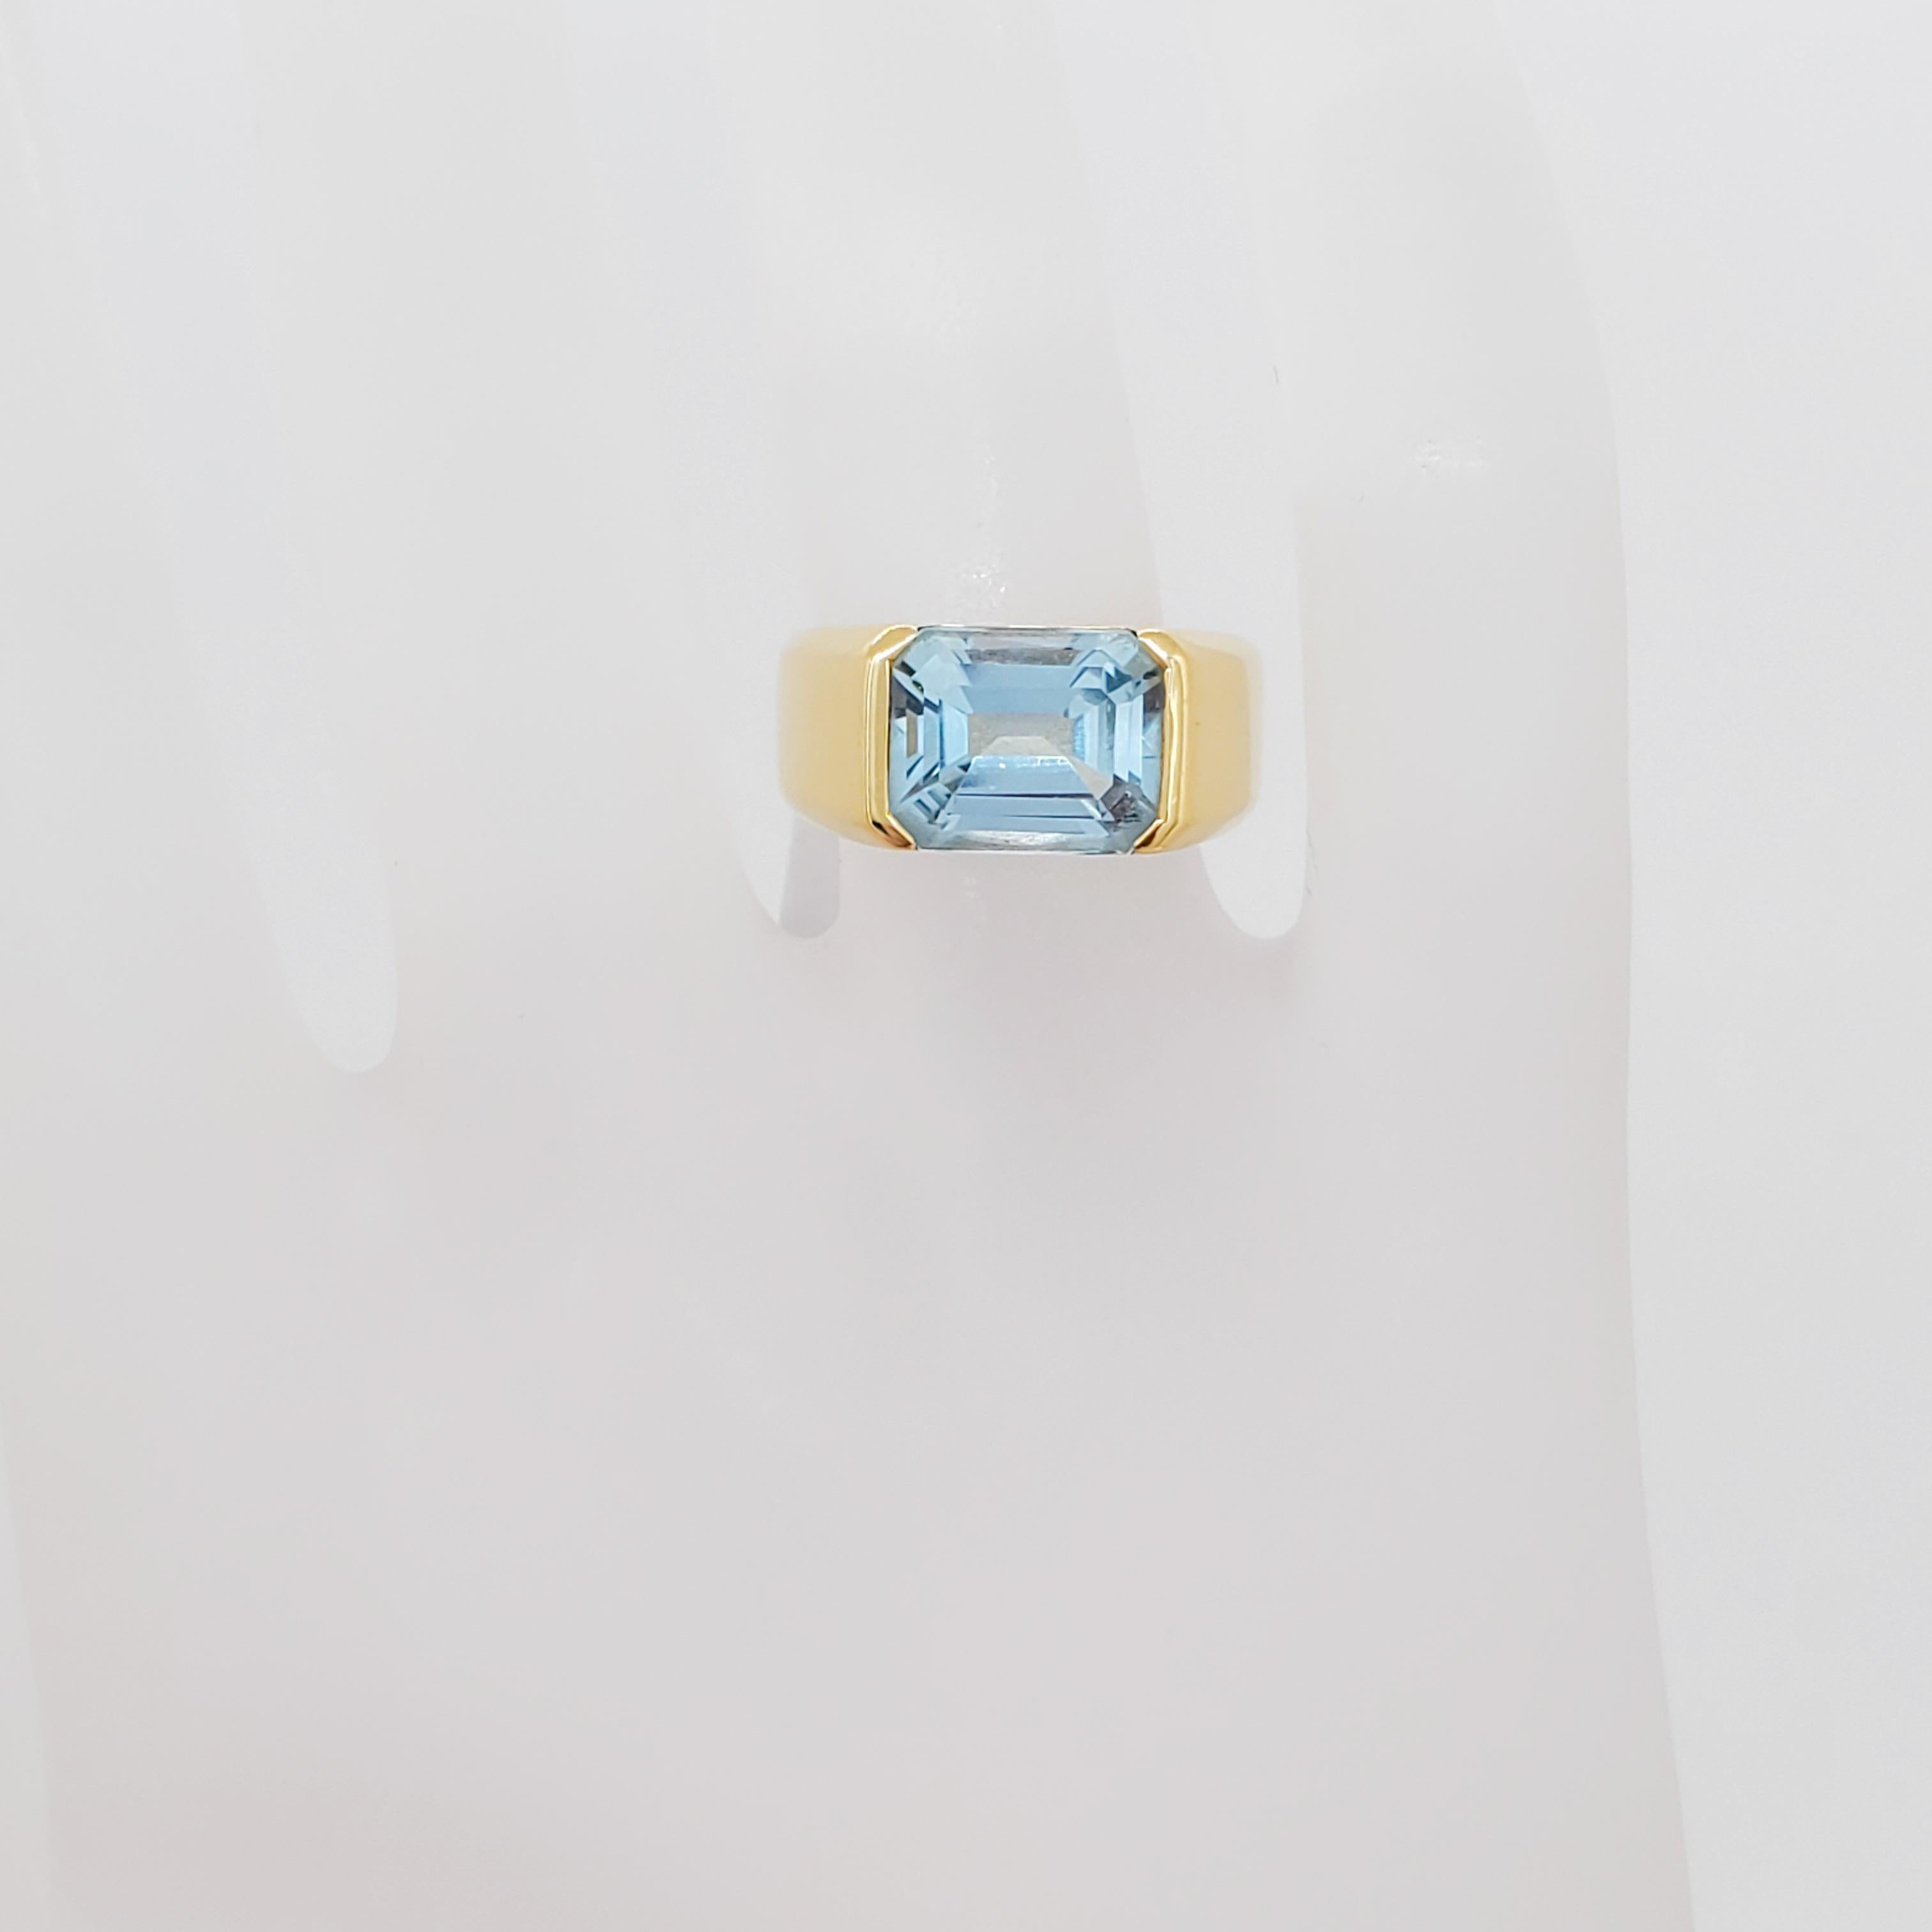 Blue Topaz Emerald Cut Ring in 18k Yellow Gold 1